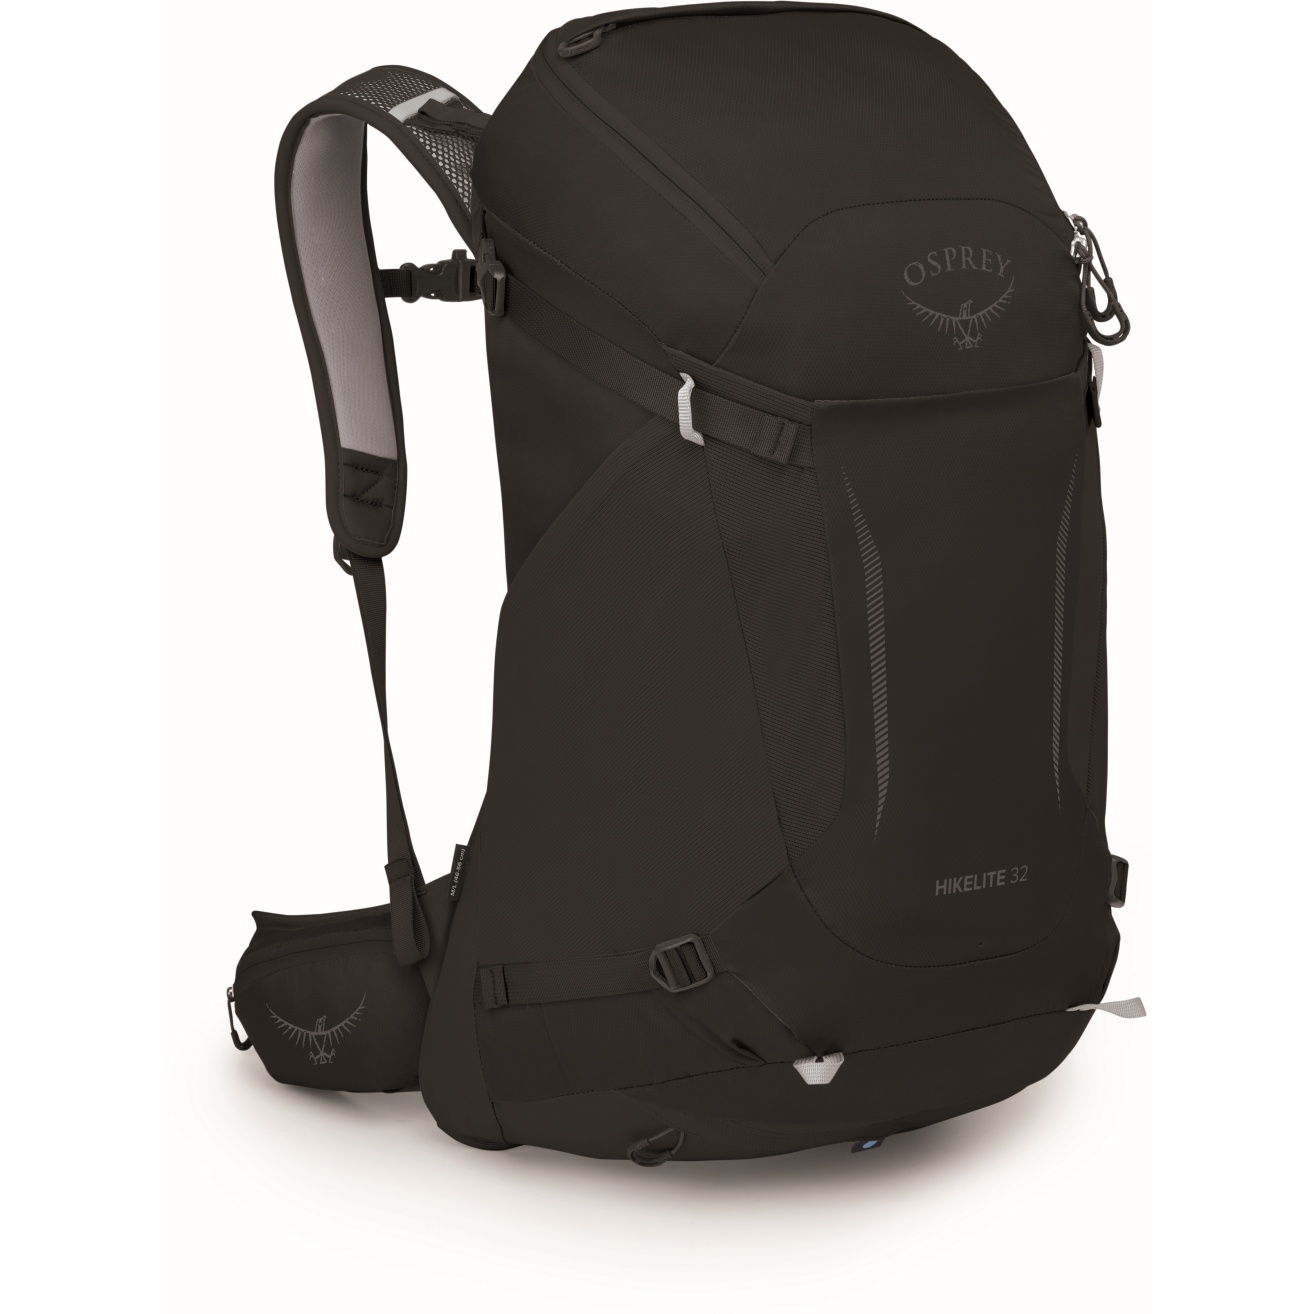 Image of Osprey Hikelite 32 Backpack - Black - S/M